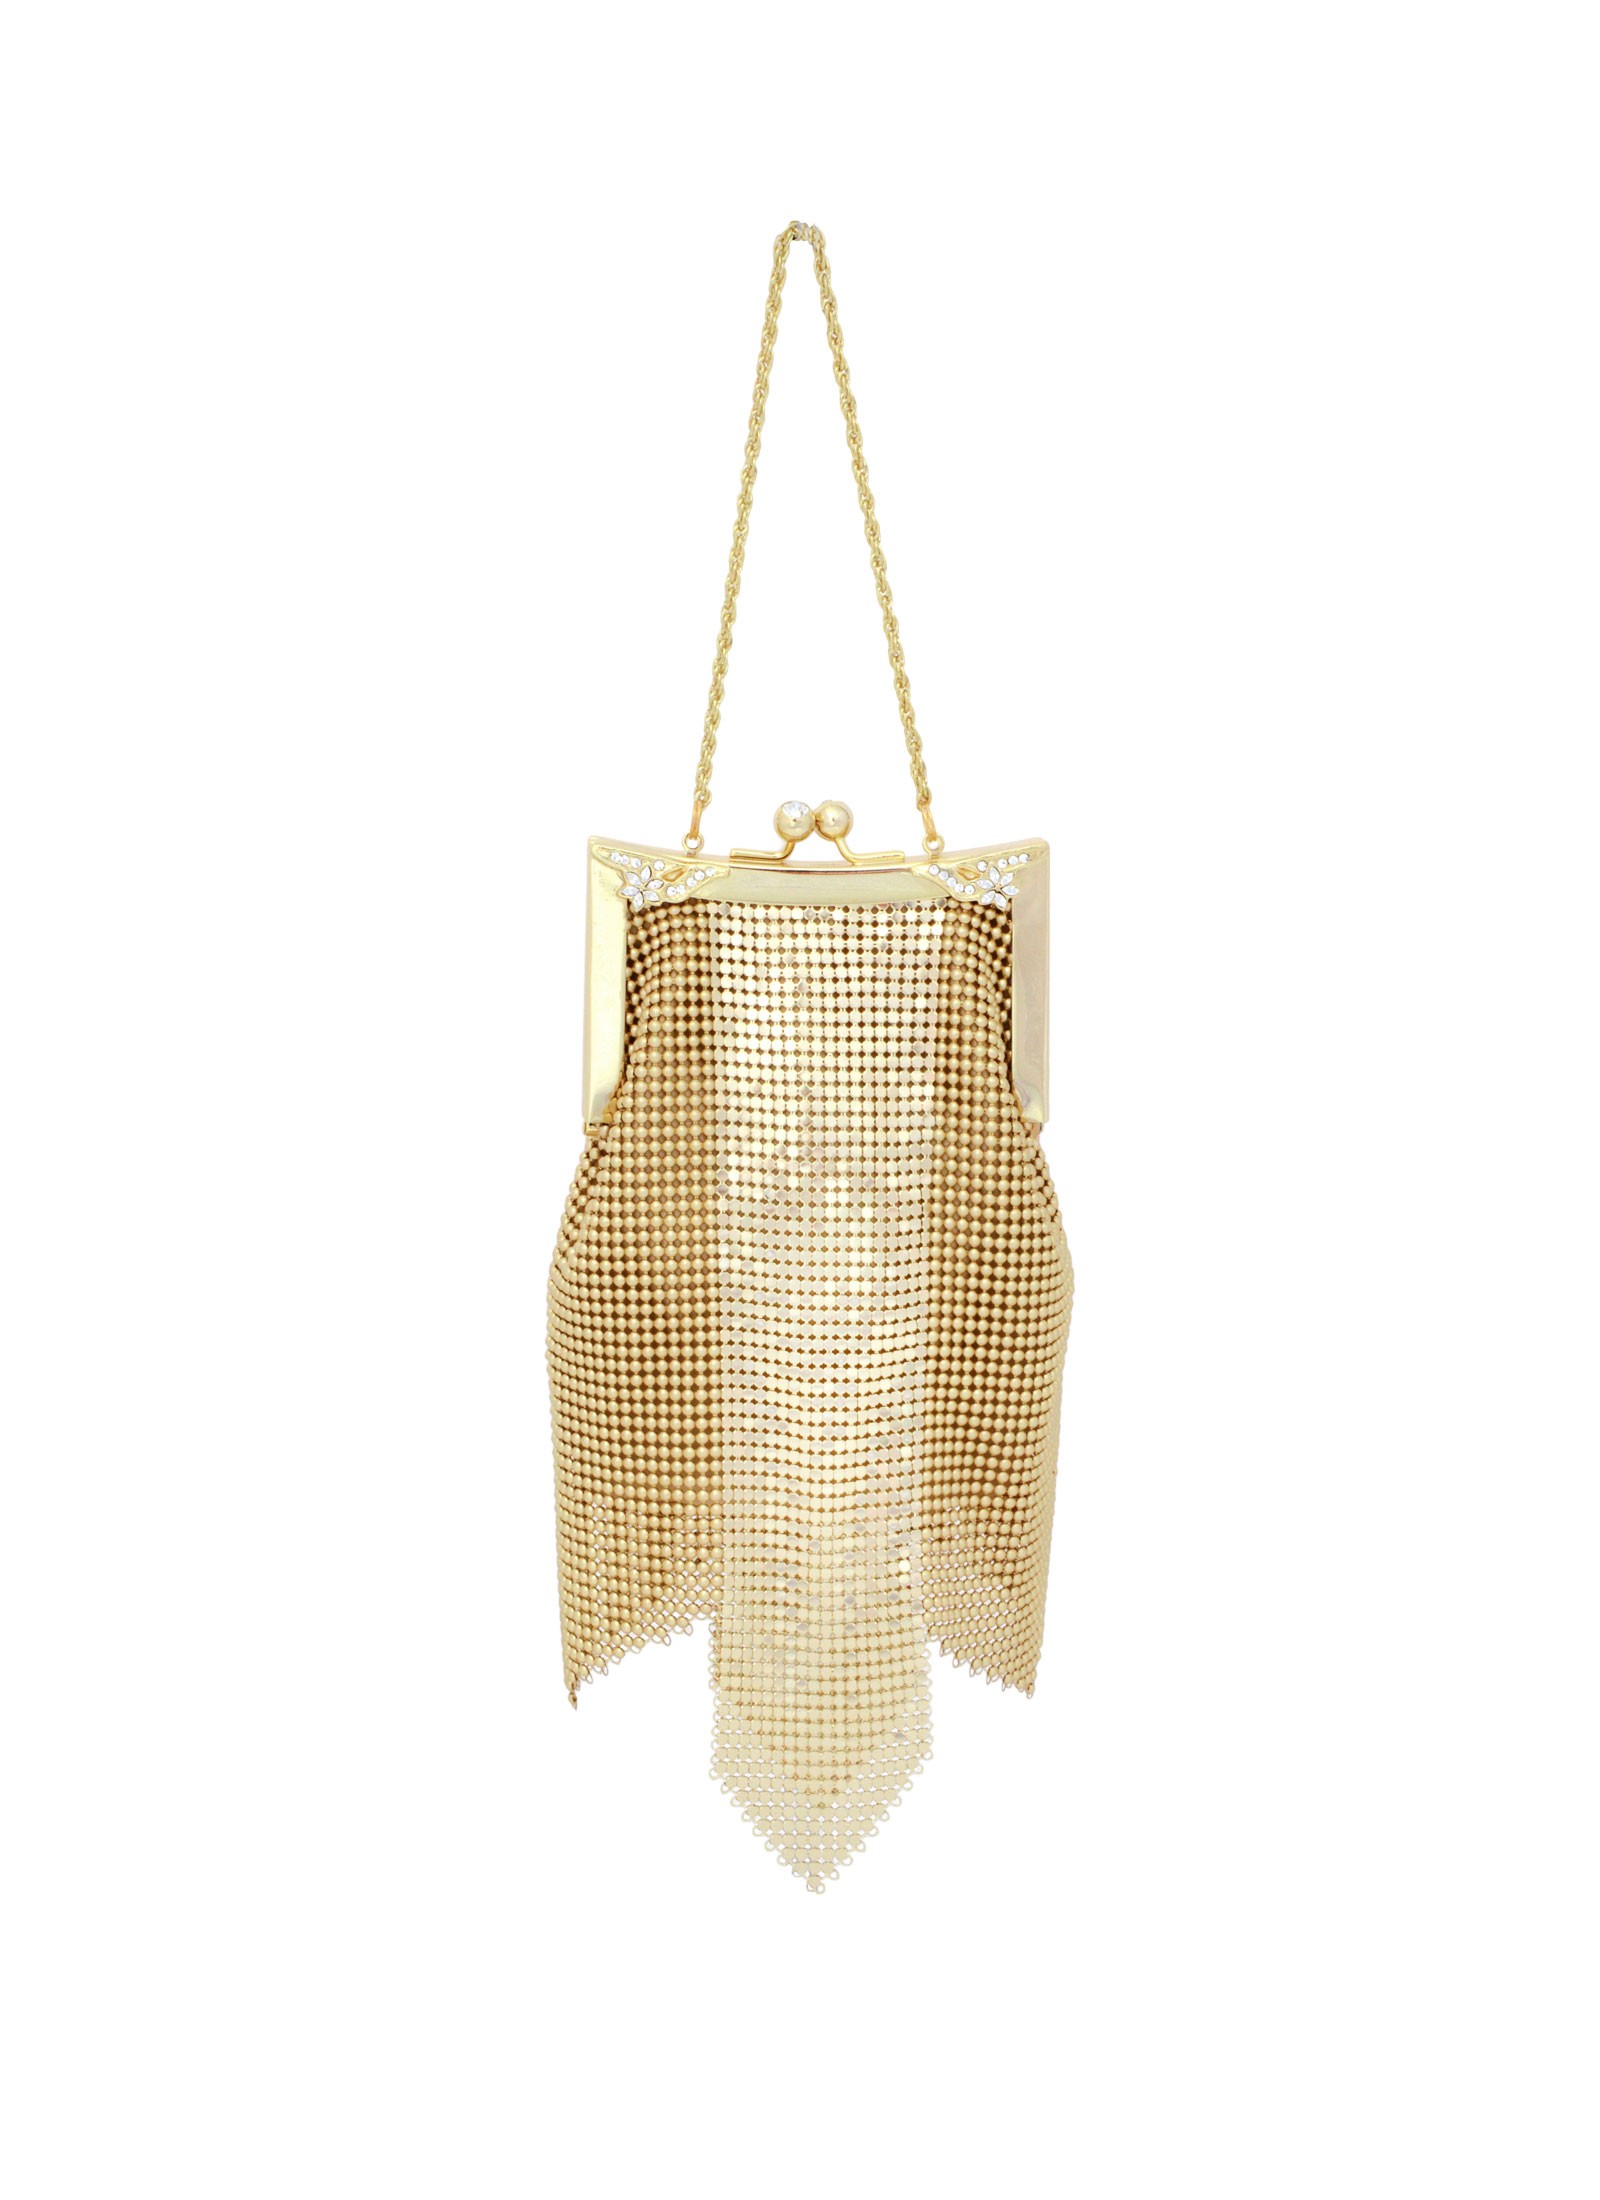 1-5882-GL-gold-newport-bag-vintage-inspired-metal-mesh-flapper-bag-crystal-wedding-handbag-metallic-evening-bag